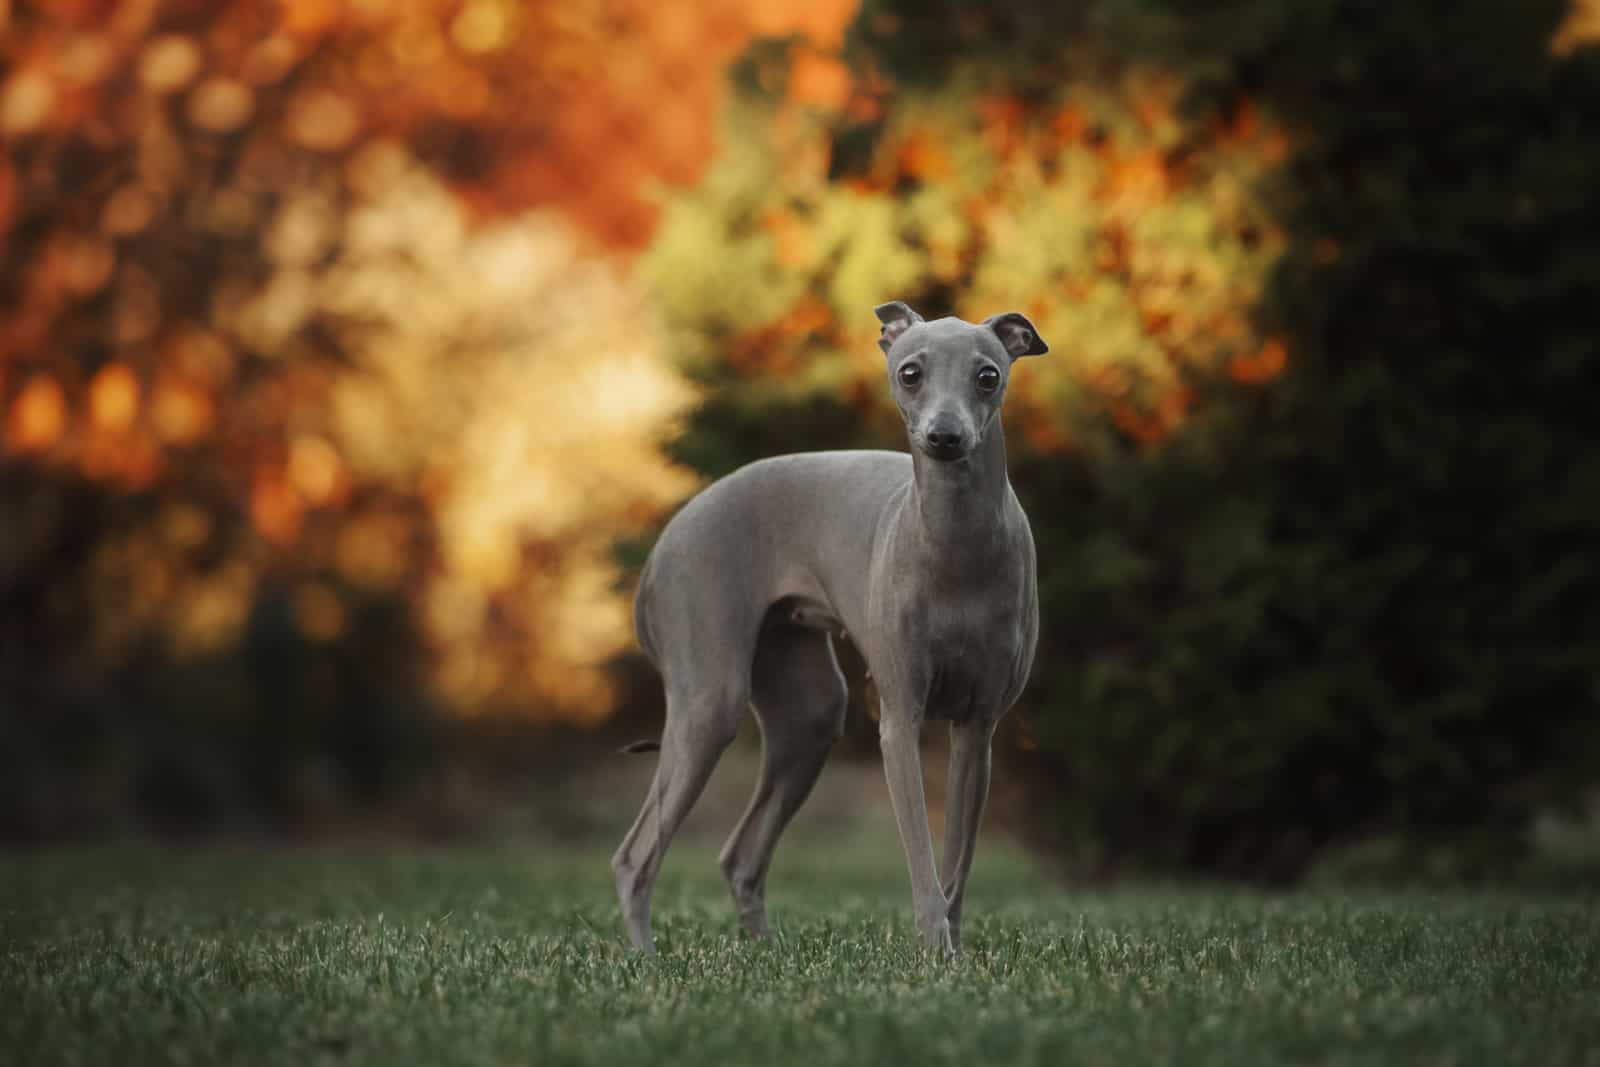 italian greyhound dog